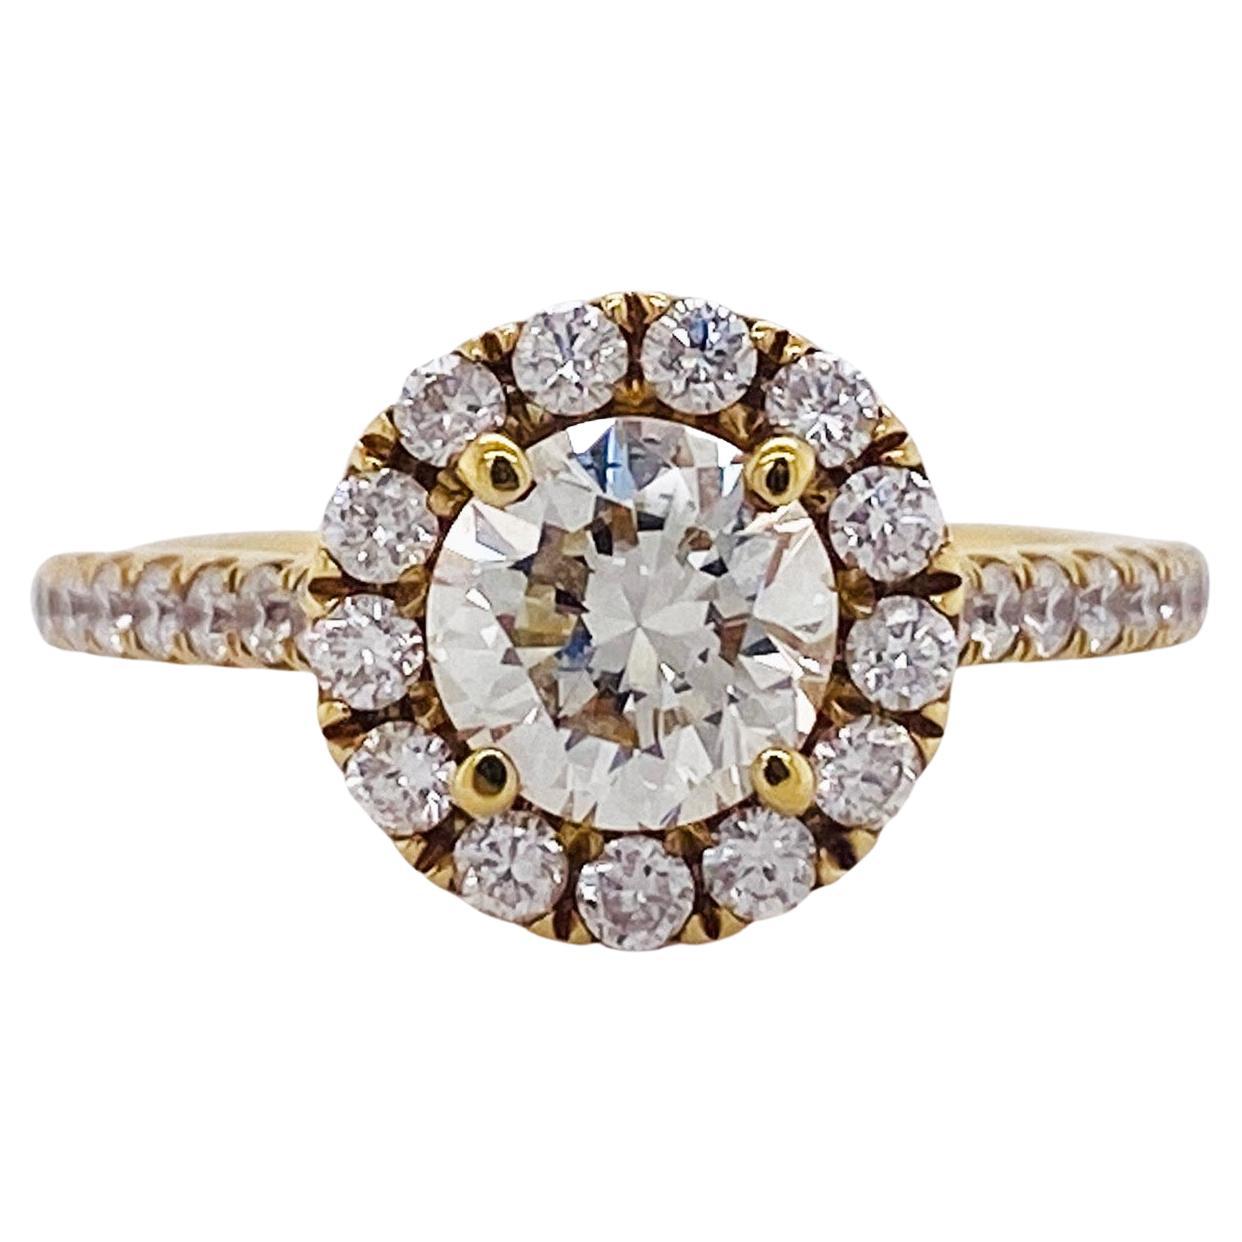 2 Carat Diamond Halo and Diamond Band Engagement Ring in 18 Karat Yellow Gold